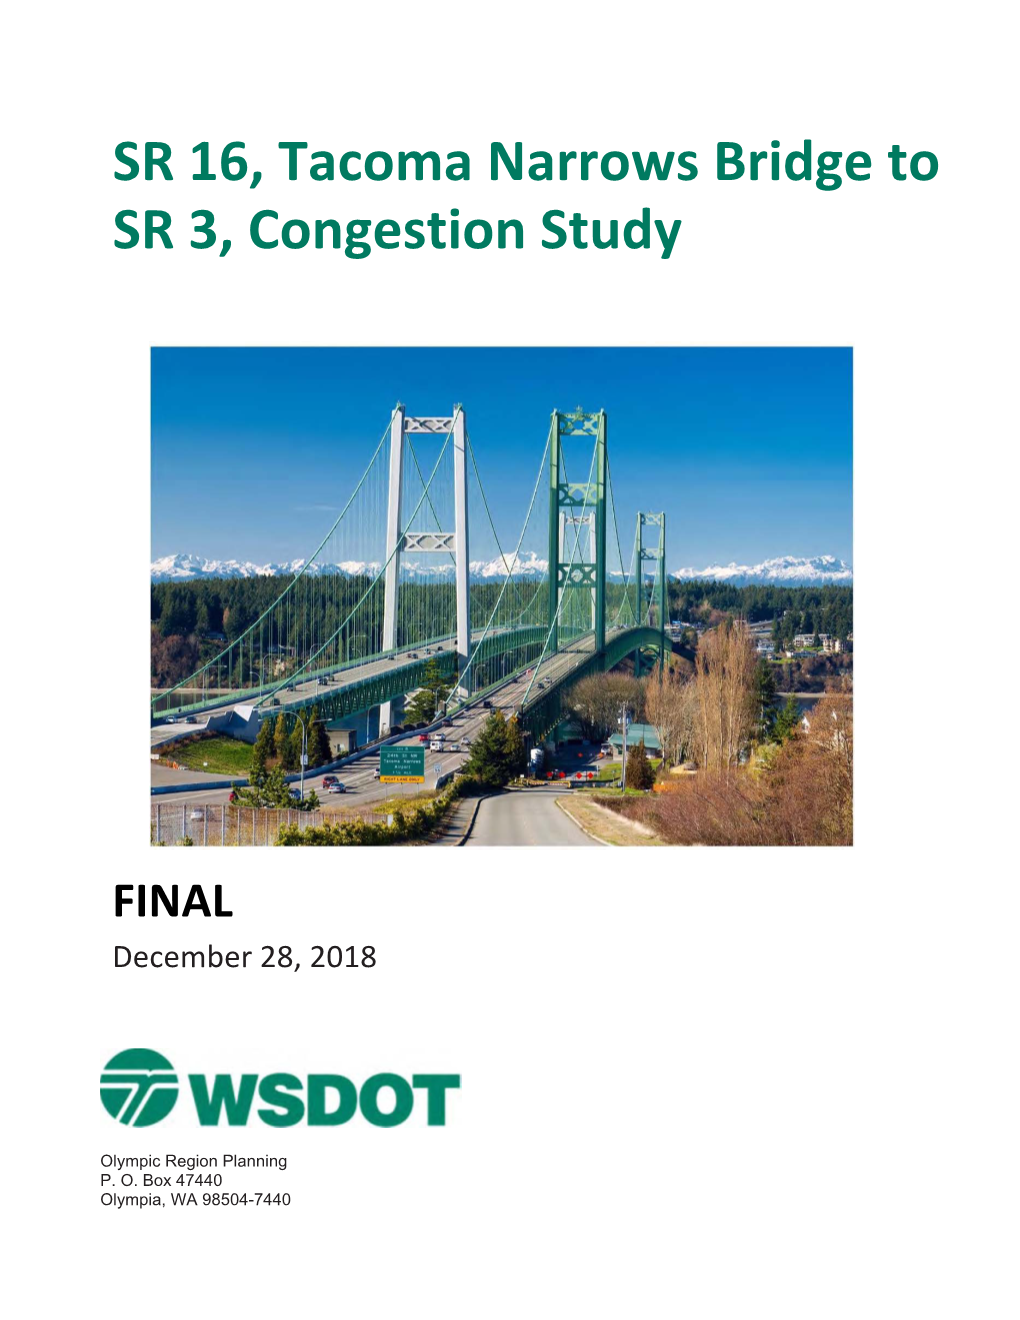 SR 16 Tacoma Narrows Bridge to SR 3 Congestion Study – December 2018